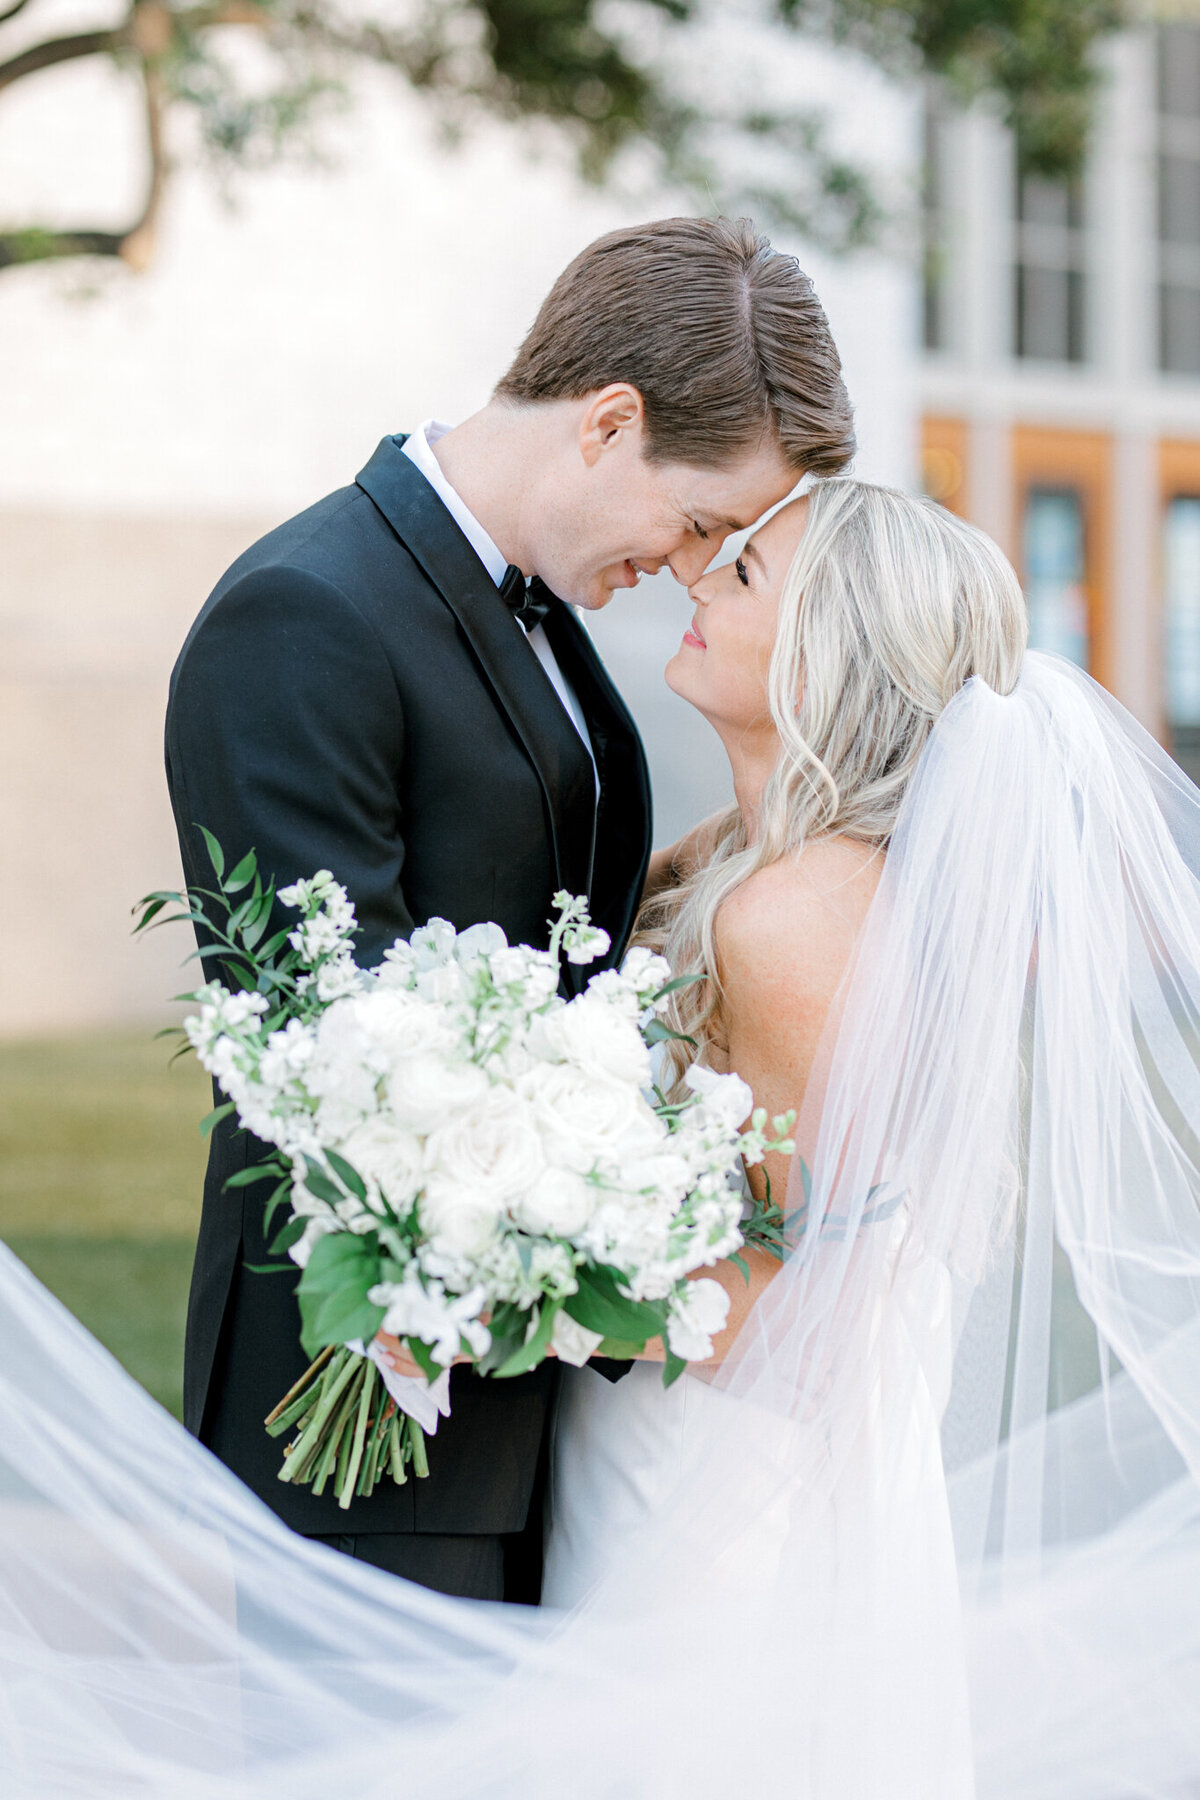 Madison & Michael's Wedding at Union Station | Dallas Wedding Photographer | Sami Kathryn Photography-138